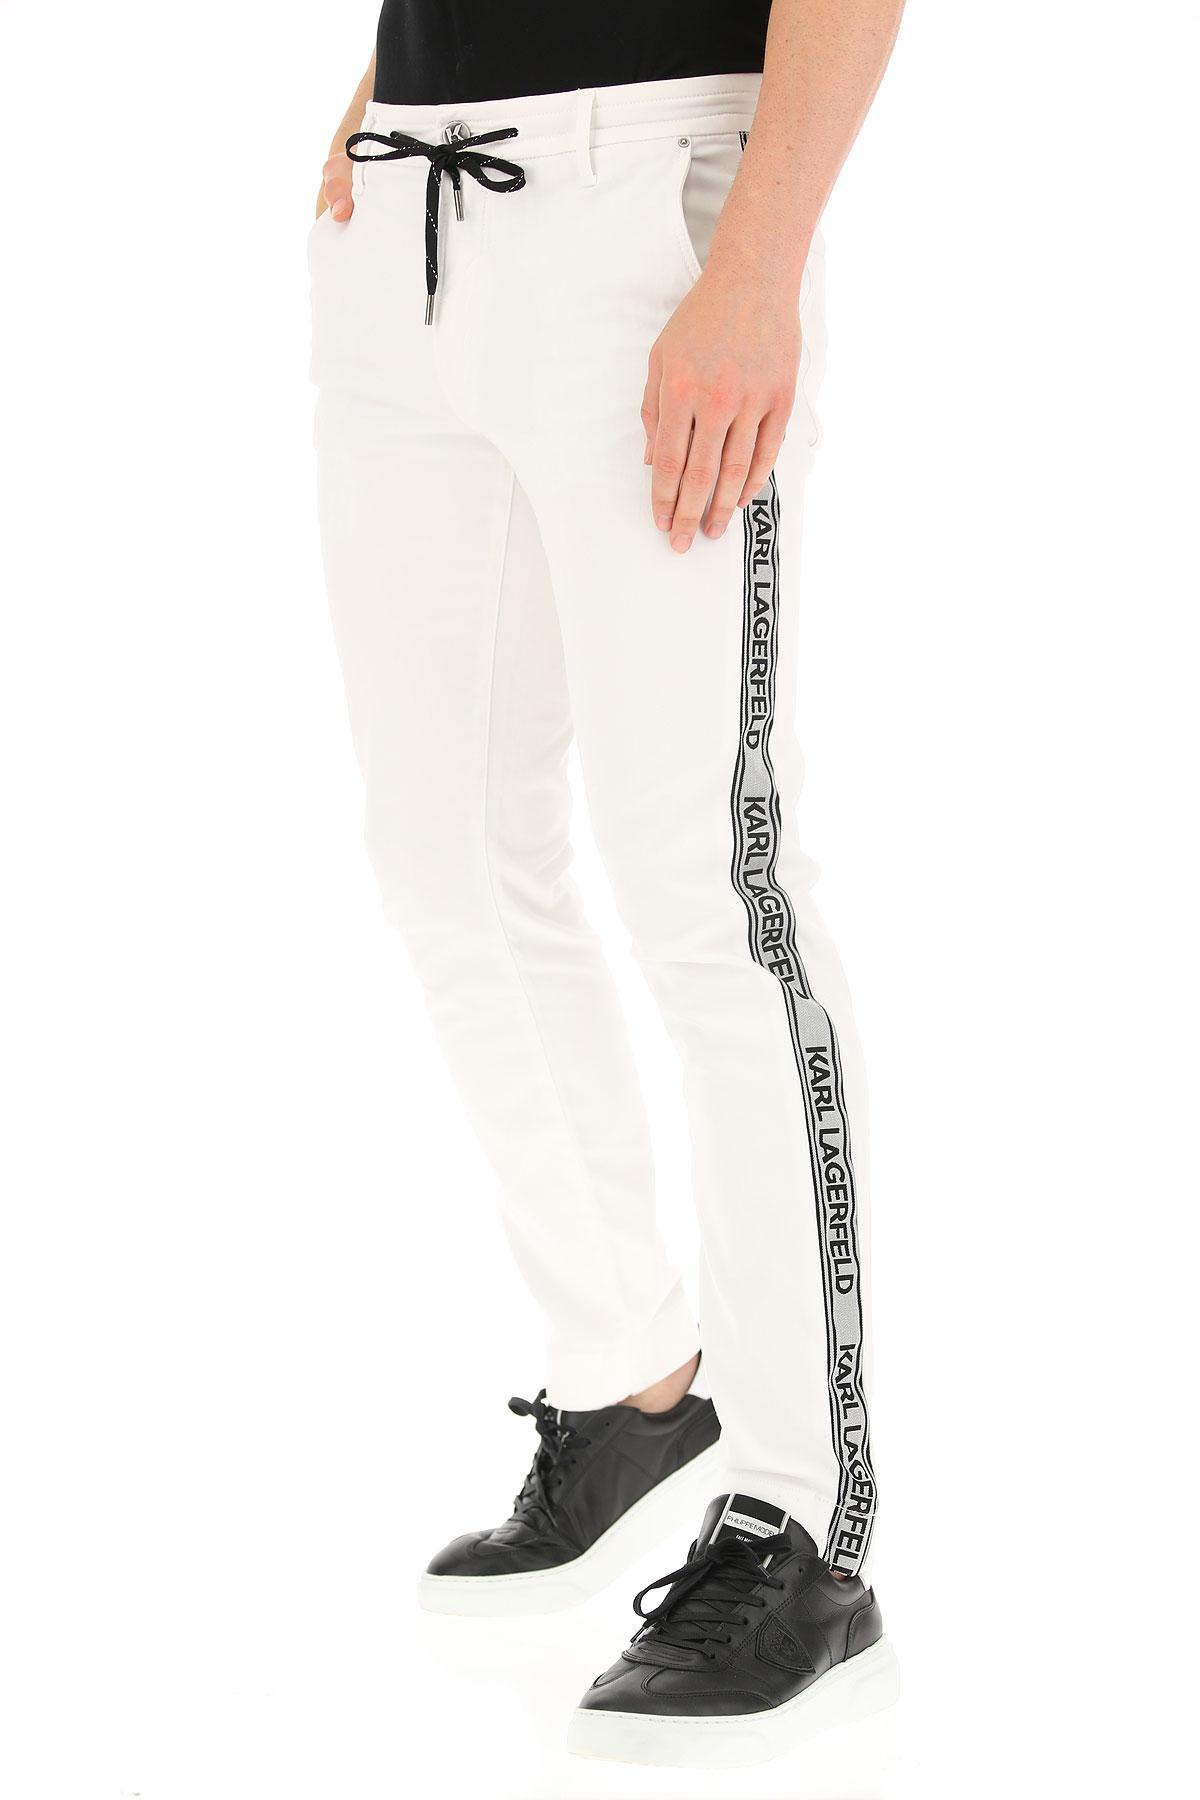 Karl Lagerfeld Denim Jeans On Sale in White for Men - Lyst